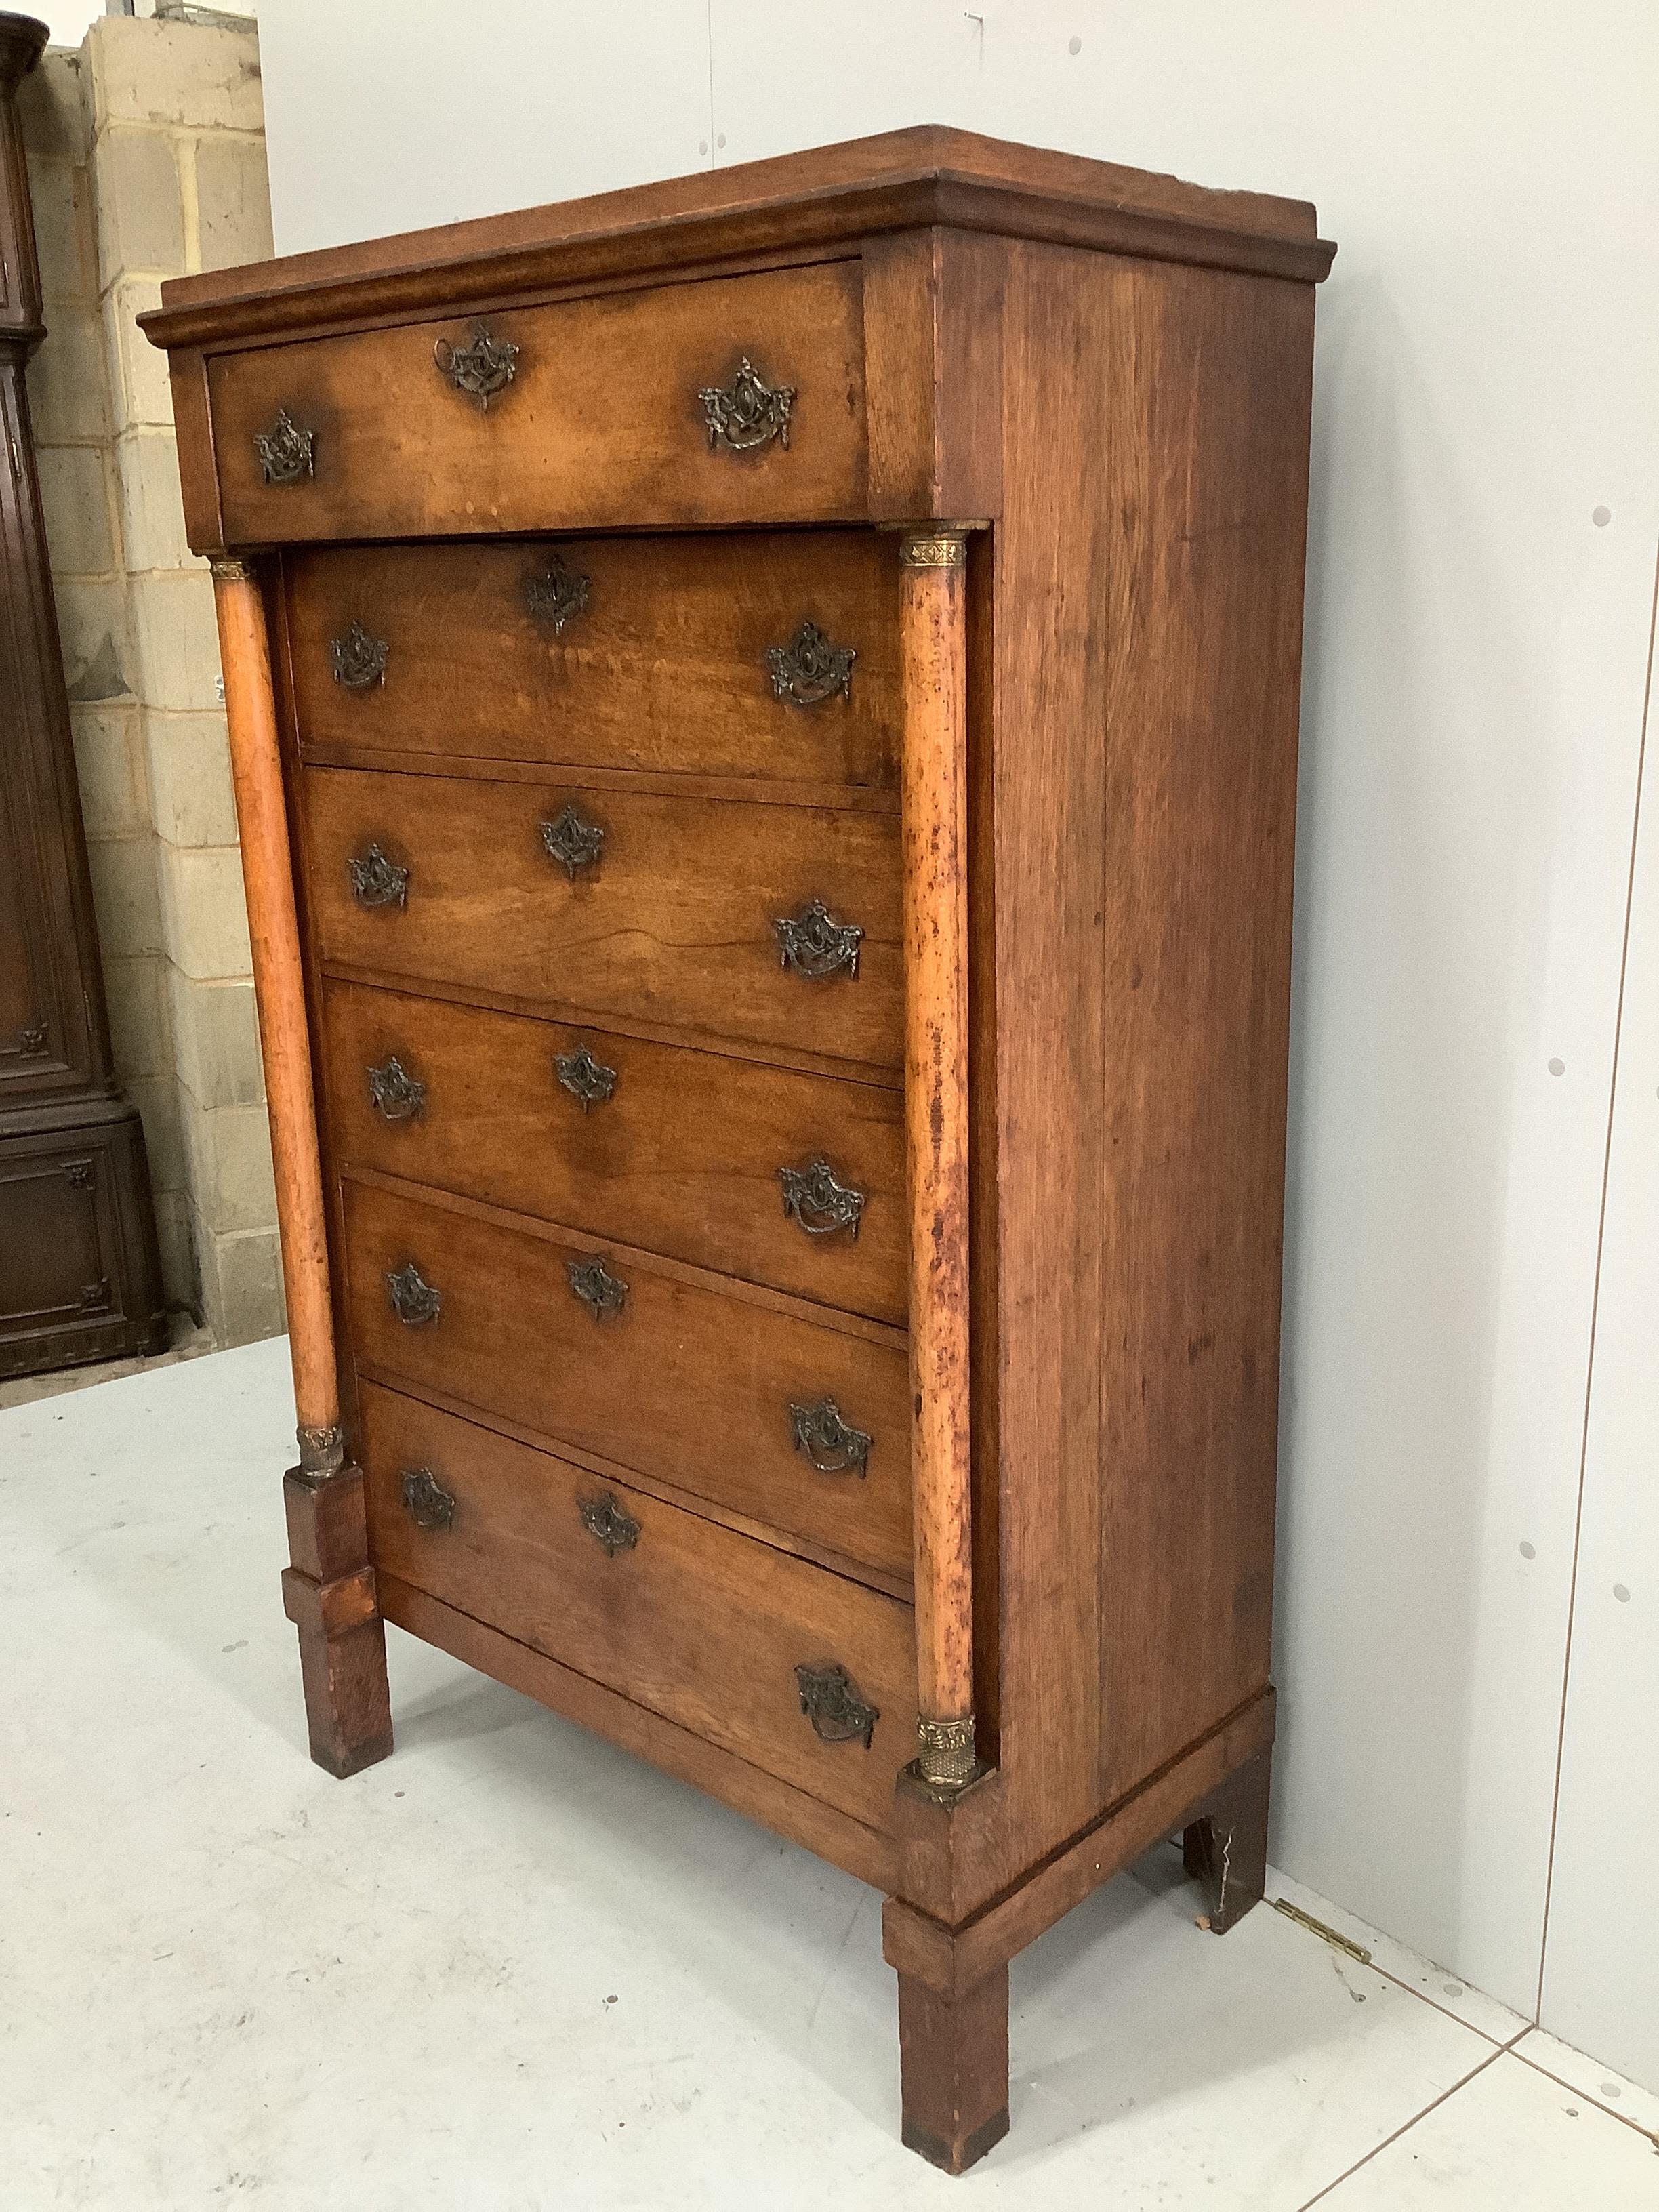 An early 19th century Dutch oak tall chest of six drawers, width 99cm, depth 50cm, height 159cm